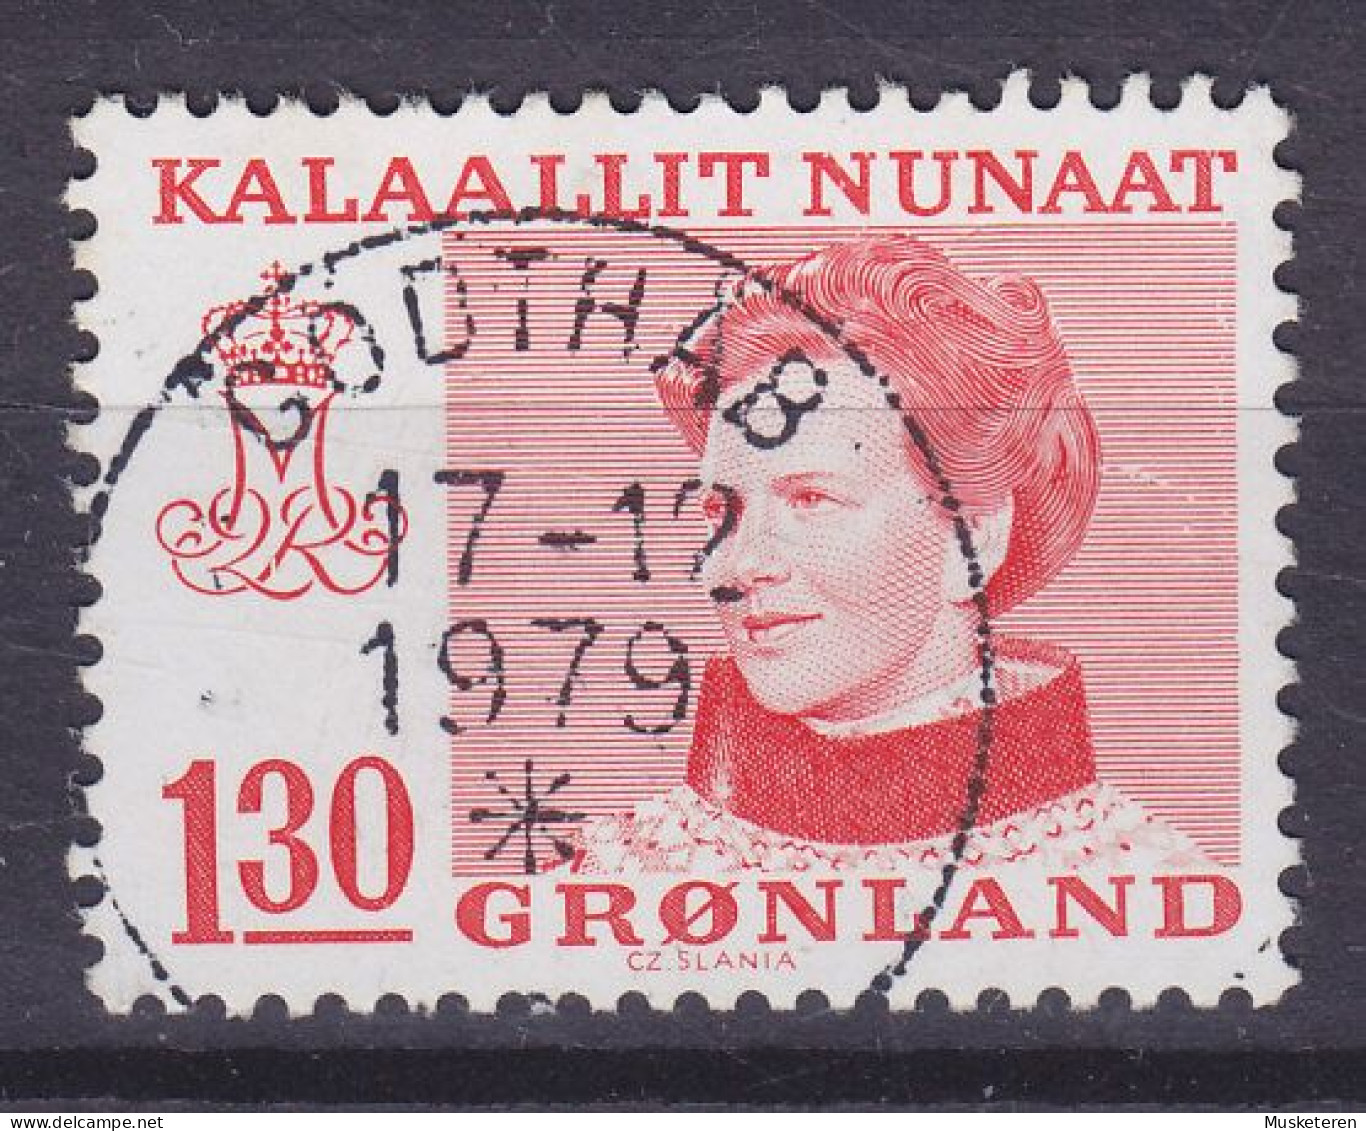 Greenland 1979 Mi. 113, 1.30 (Kr) Queen Margrethe II. (Cz. Slania) Deluxe GODTHÅB Cancel !! - Usados